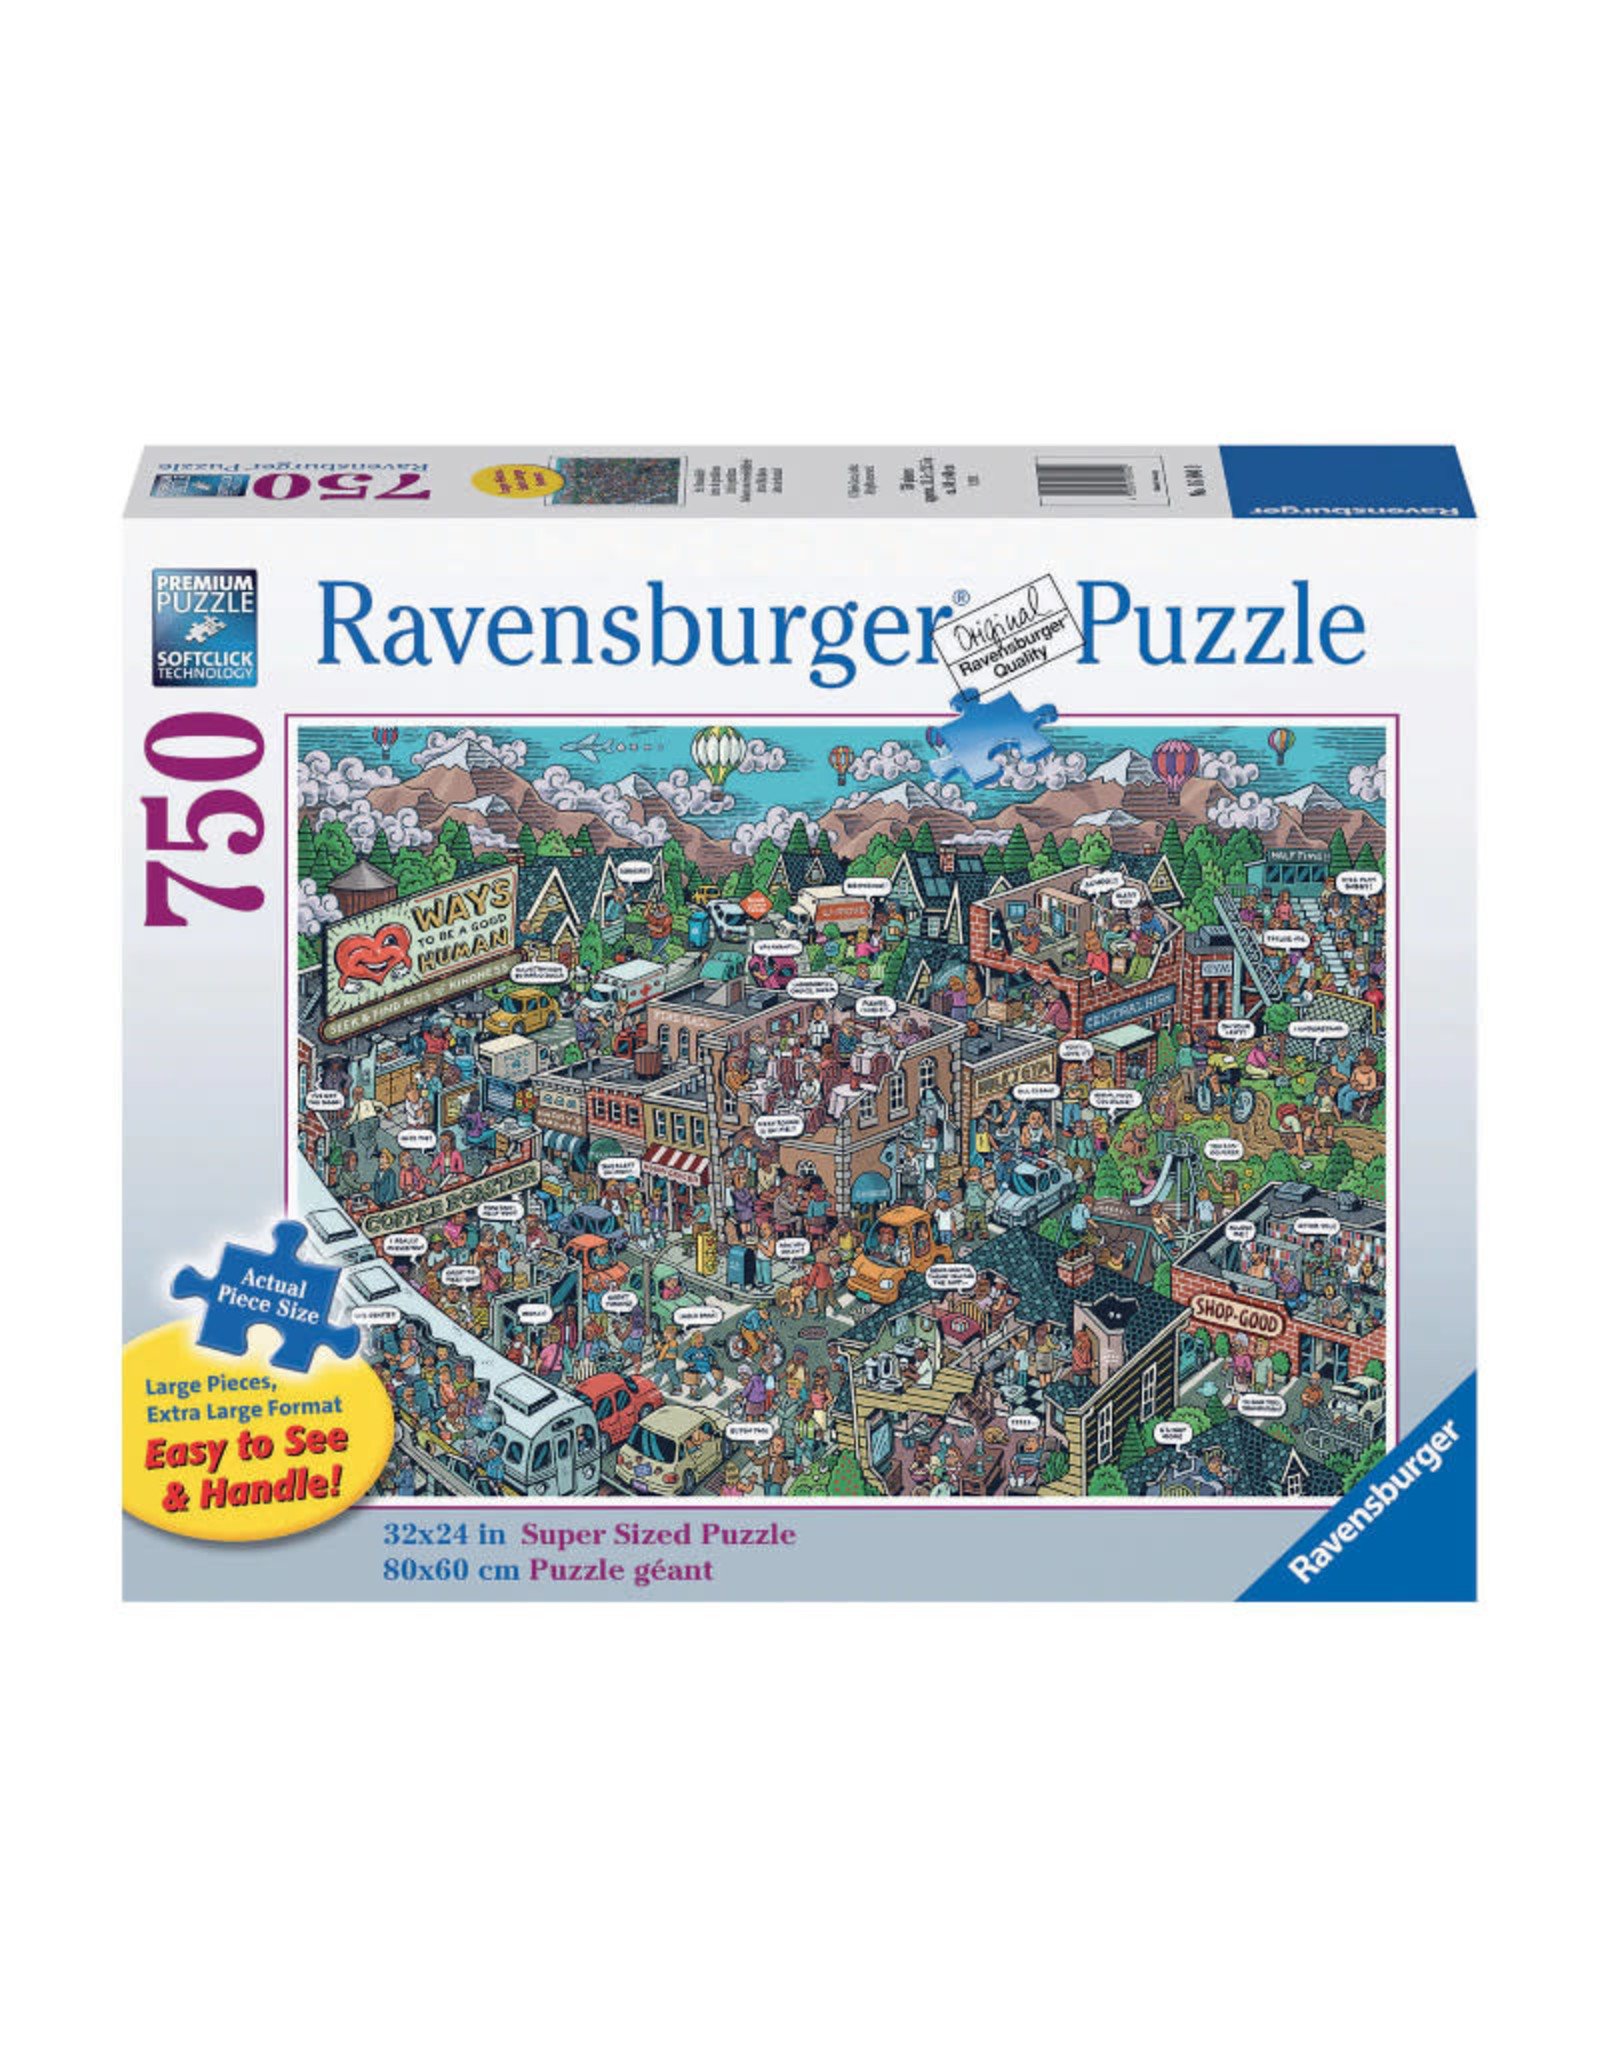 Ravensburger Acts of Kindness Puzzle (750 PCS Large Format)